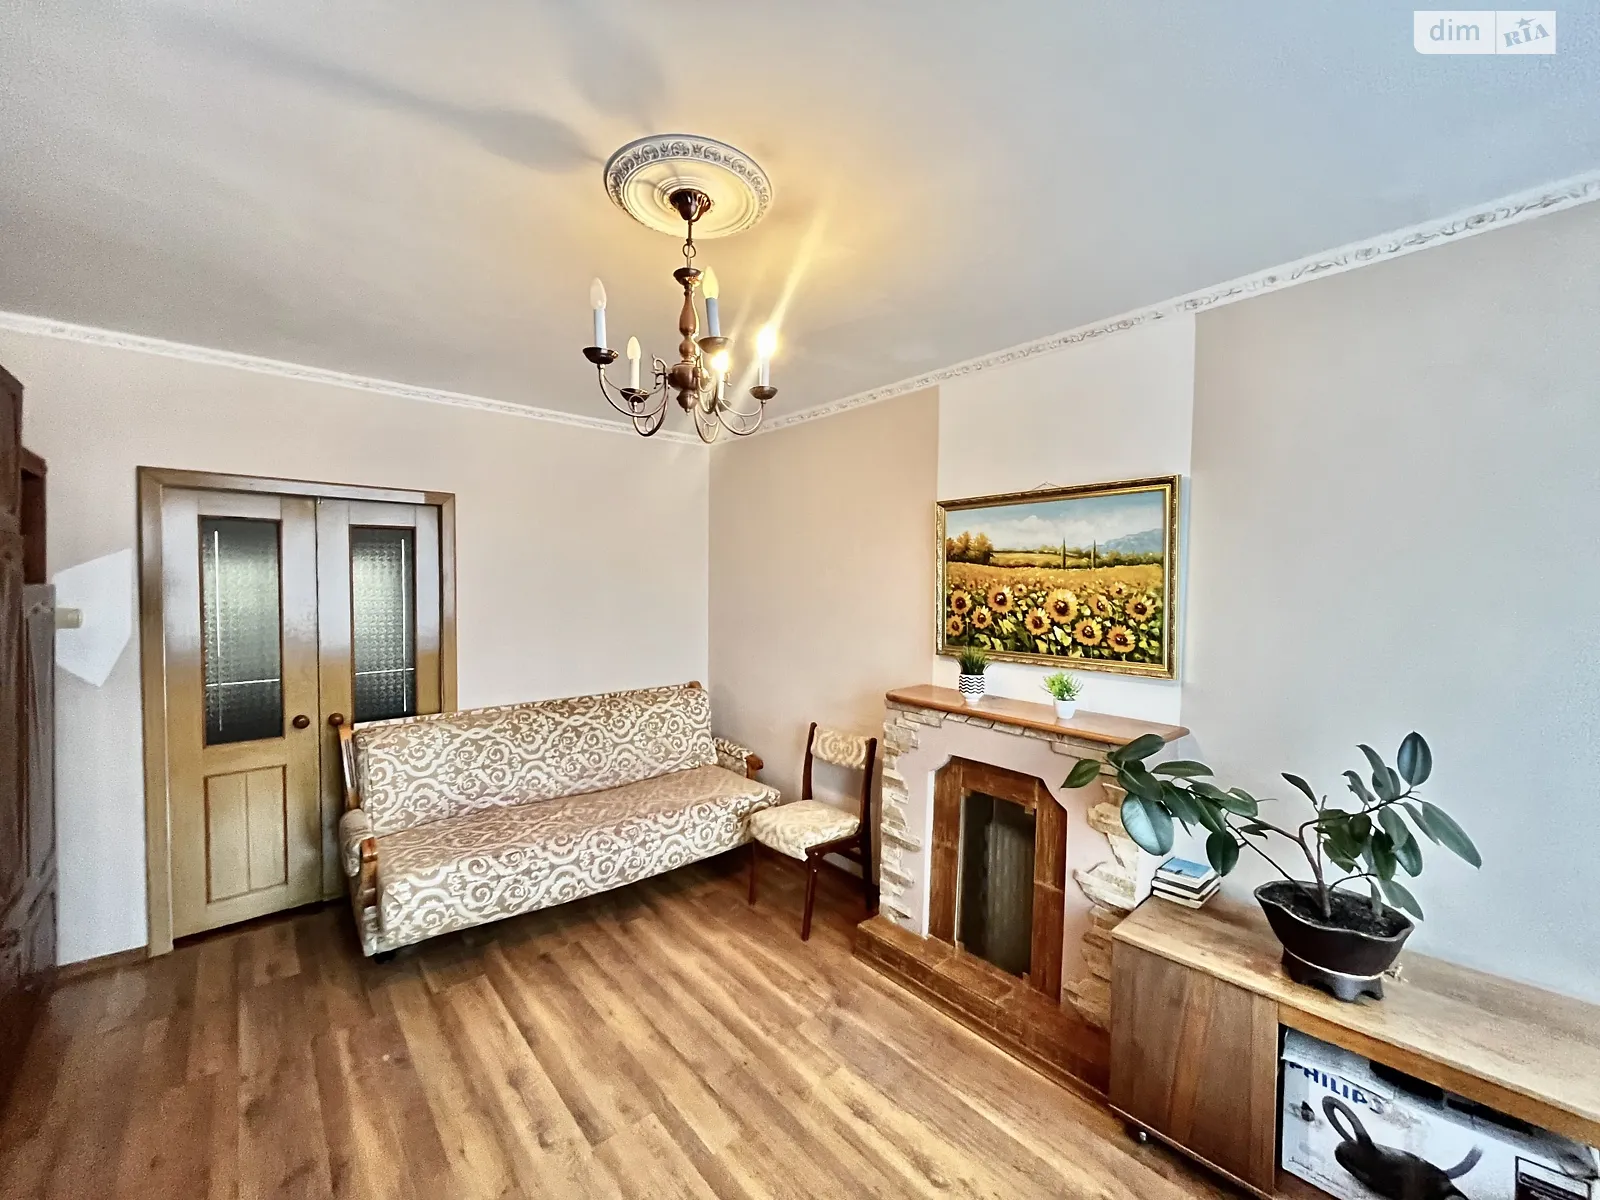 Продається 3-кімнатна квартира 67 кв. м у Хмельницькому, вул. Степана Бандери, 10